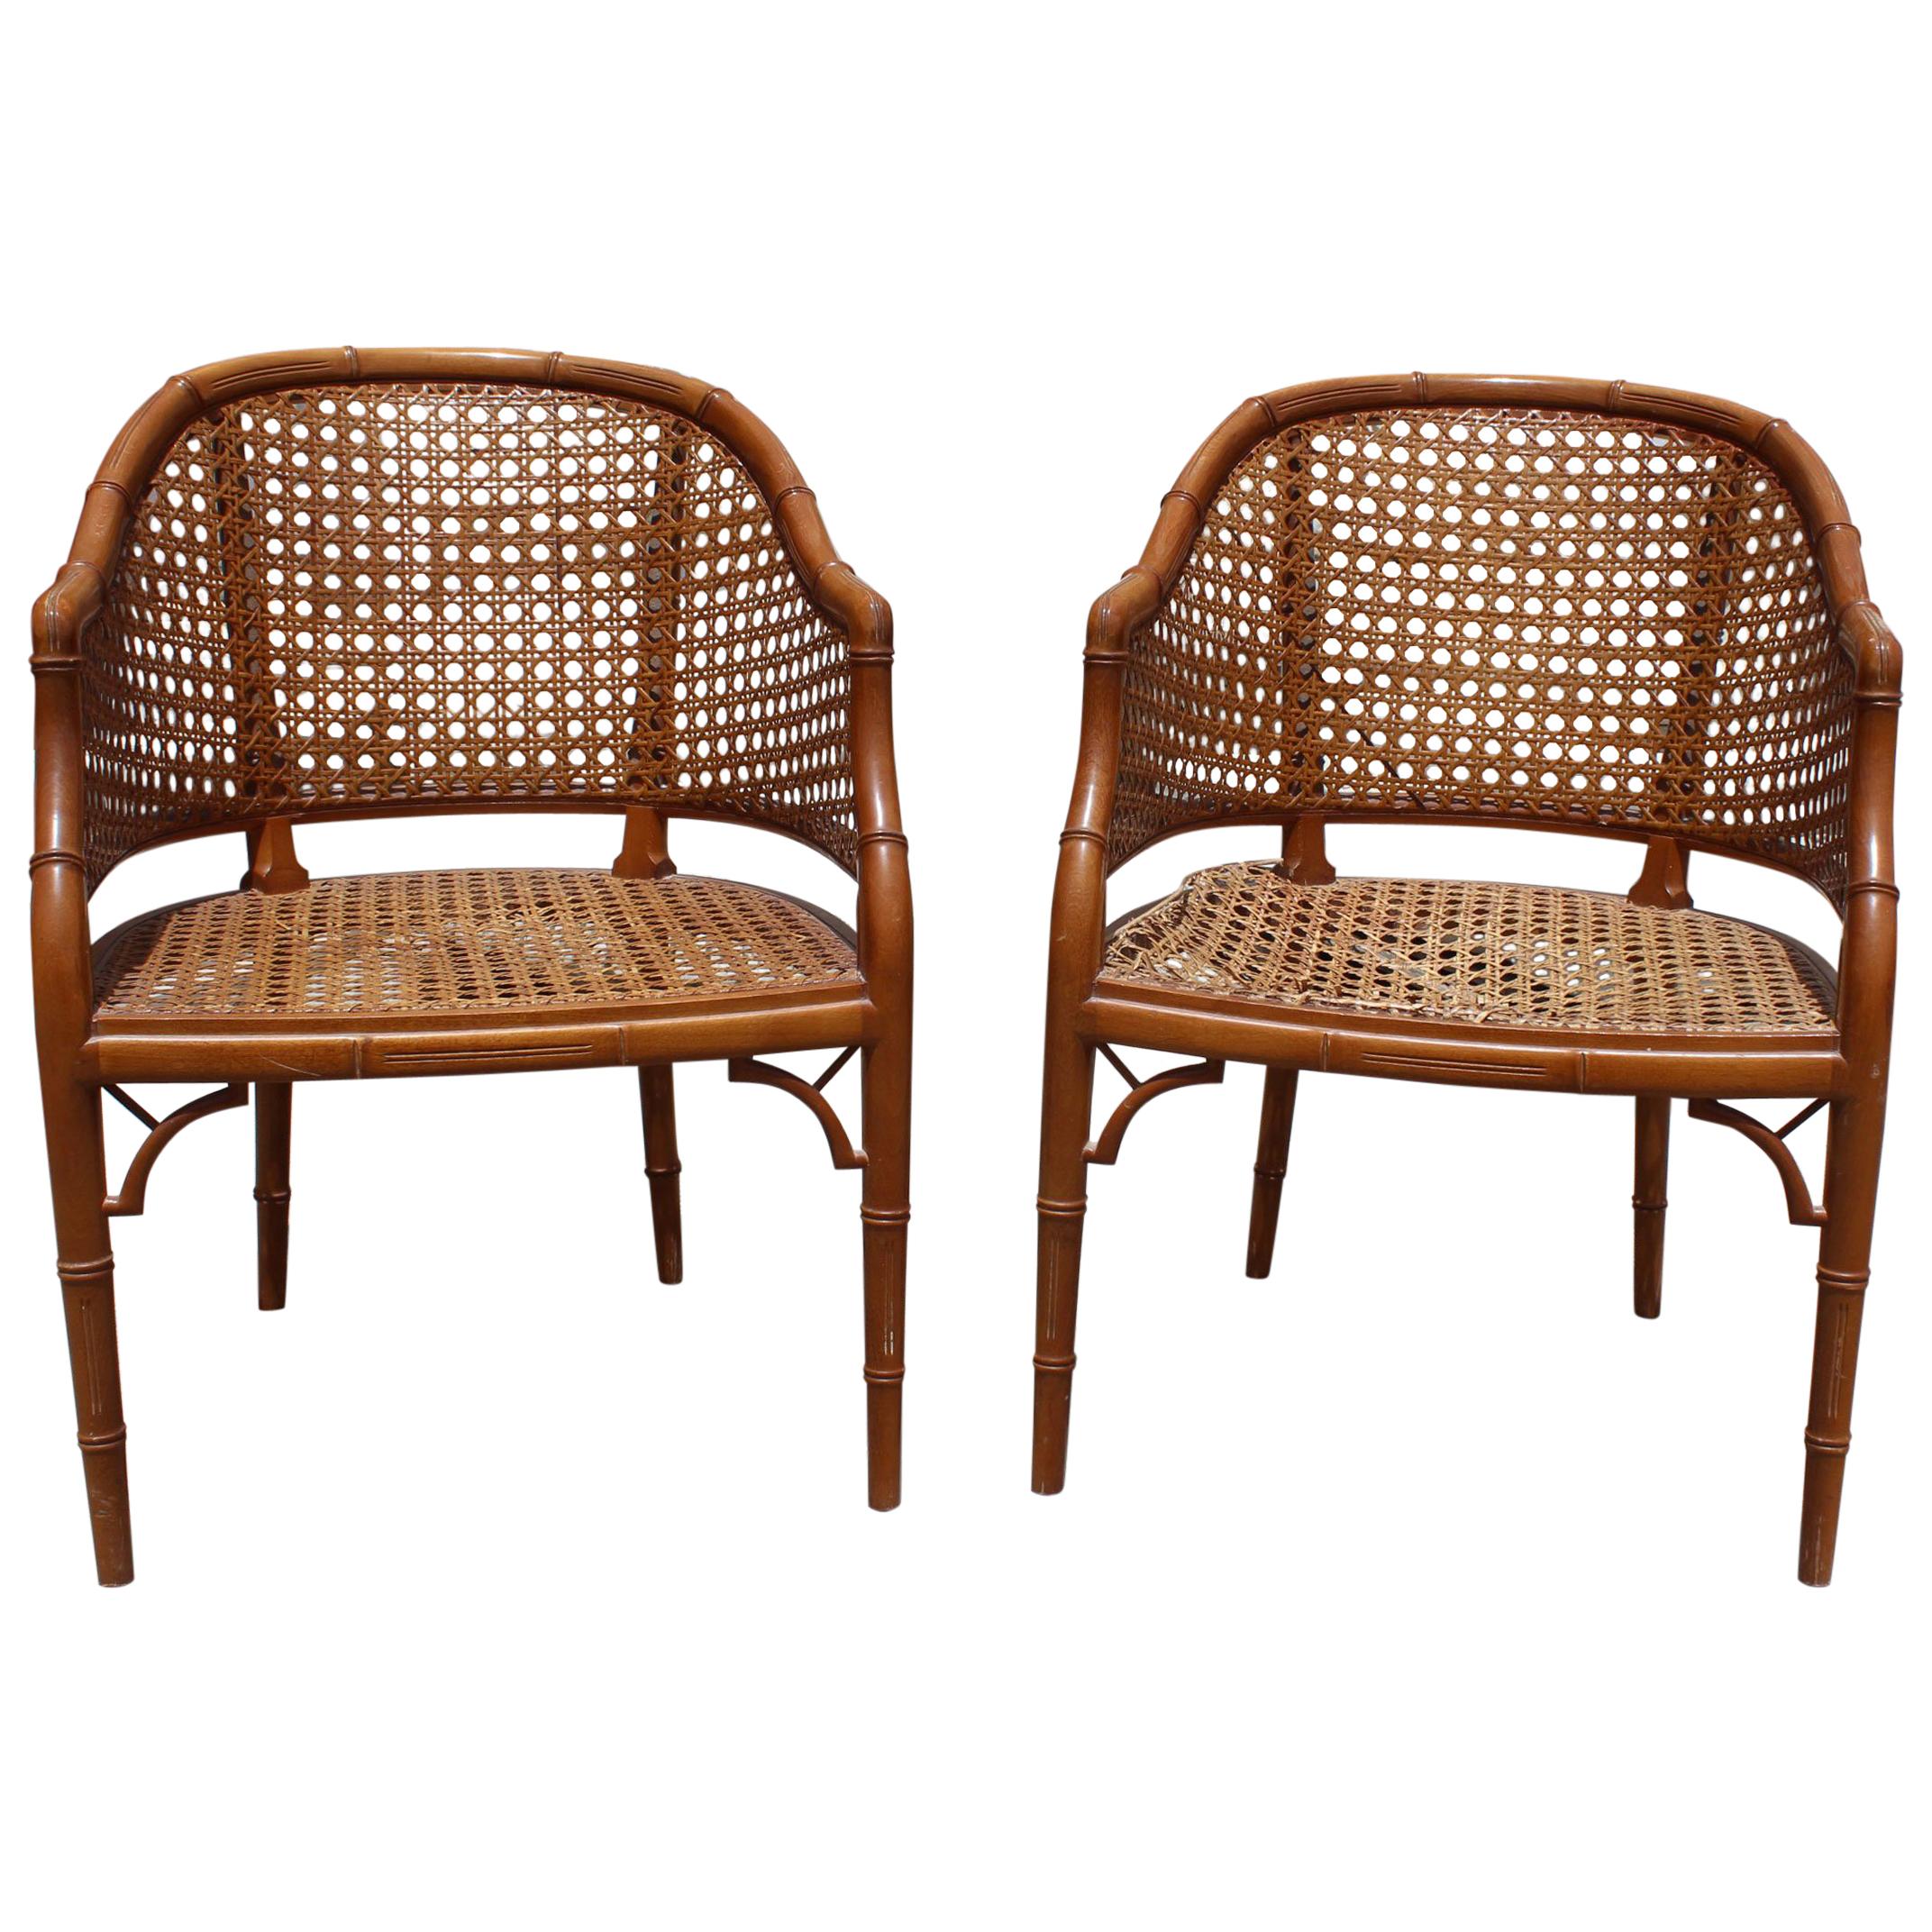 1970s Pair of Spanish Wooden Chairs Imitating Bamboo